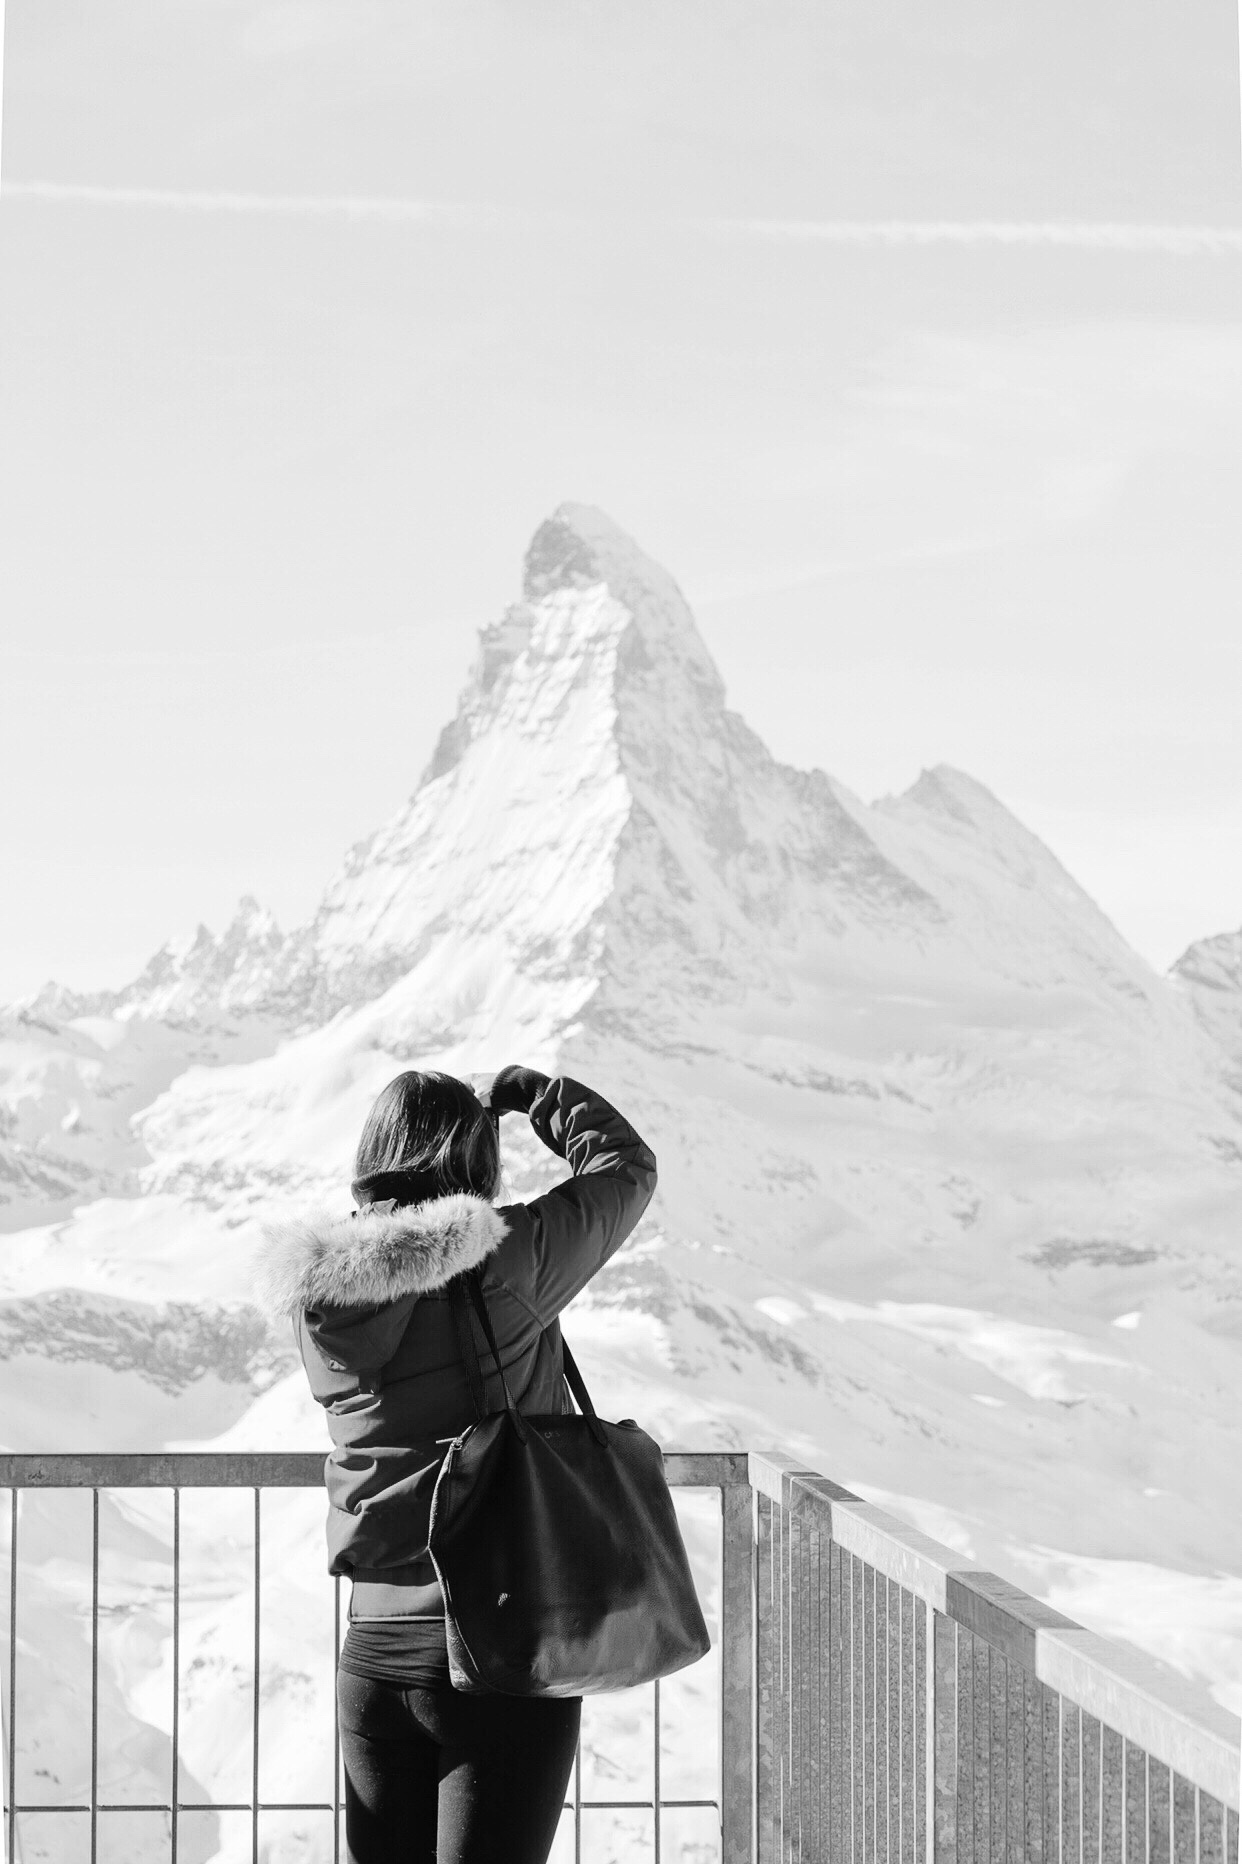 Winter in Zermatt: A Guide to Visiting Switzerland's Most Charming Village